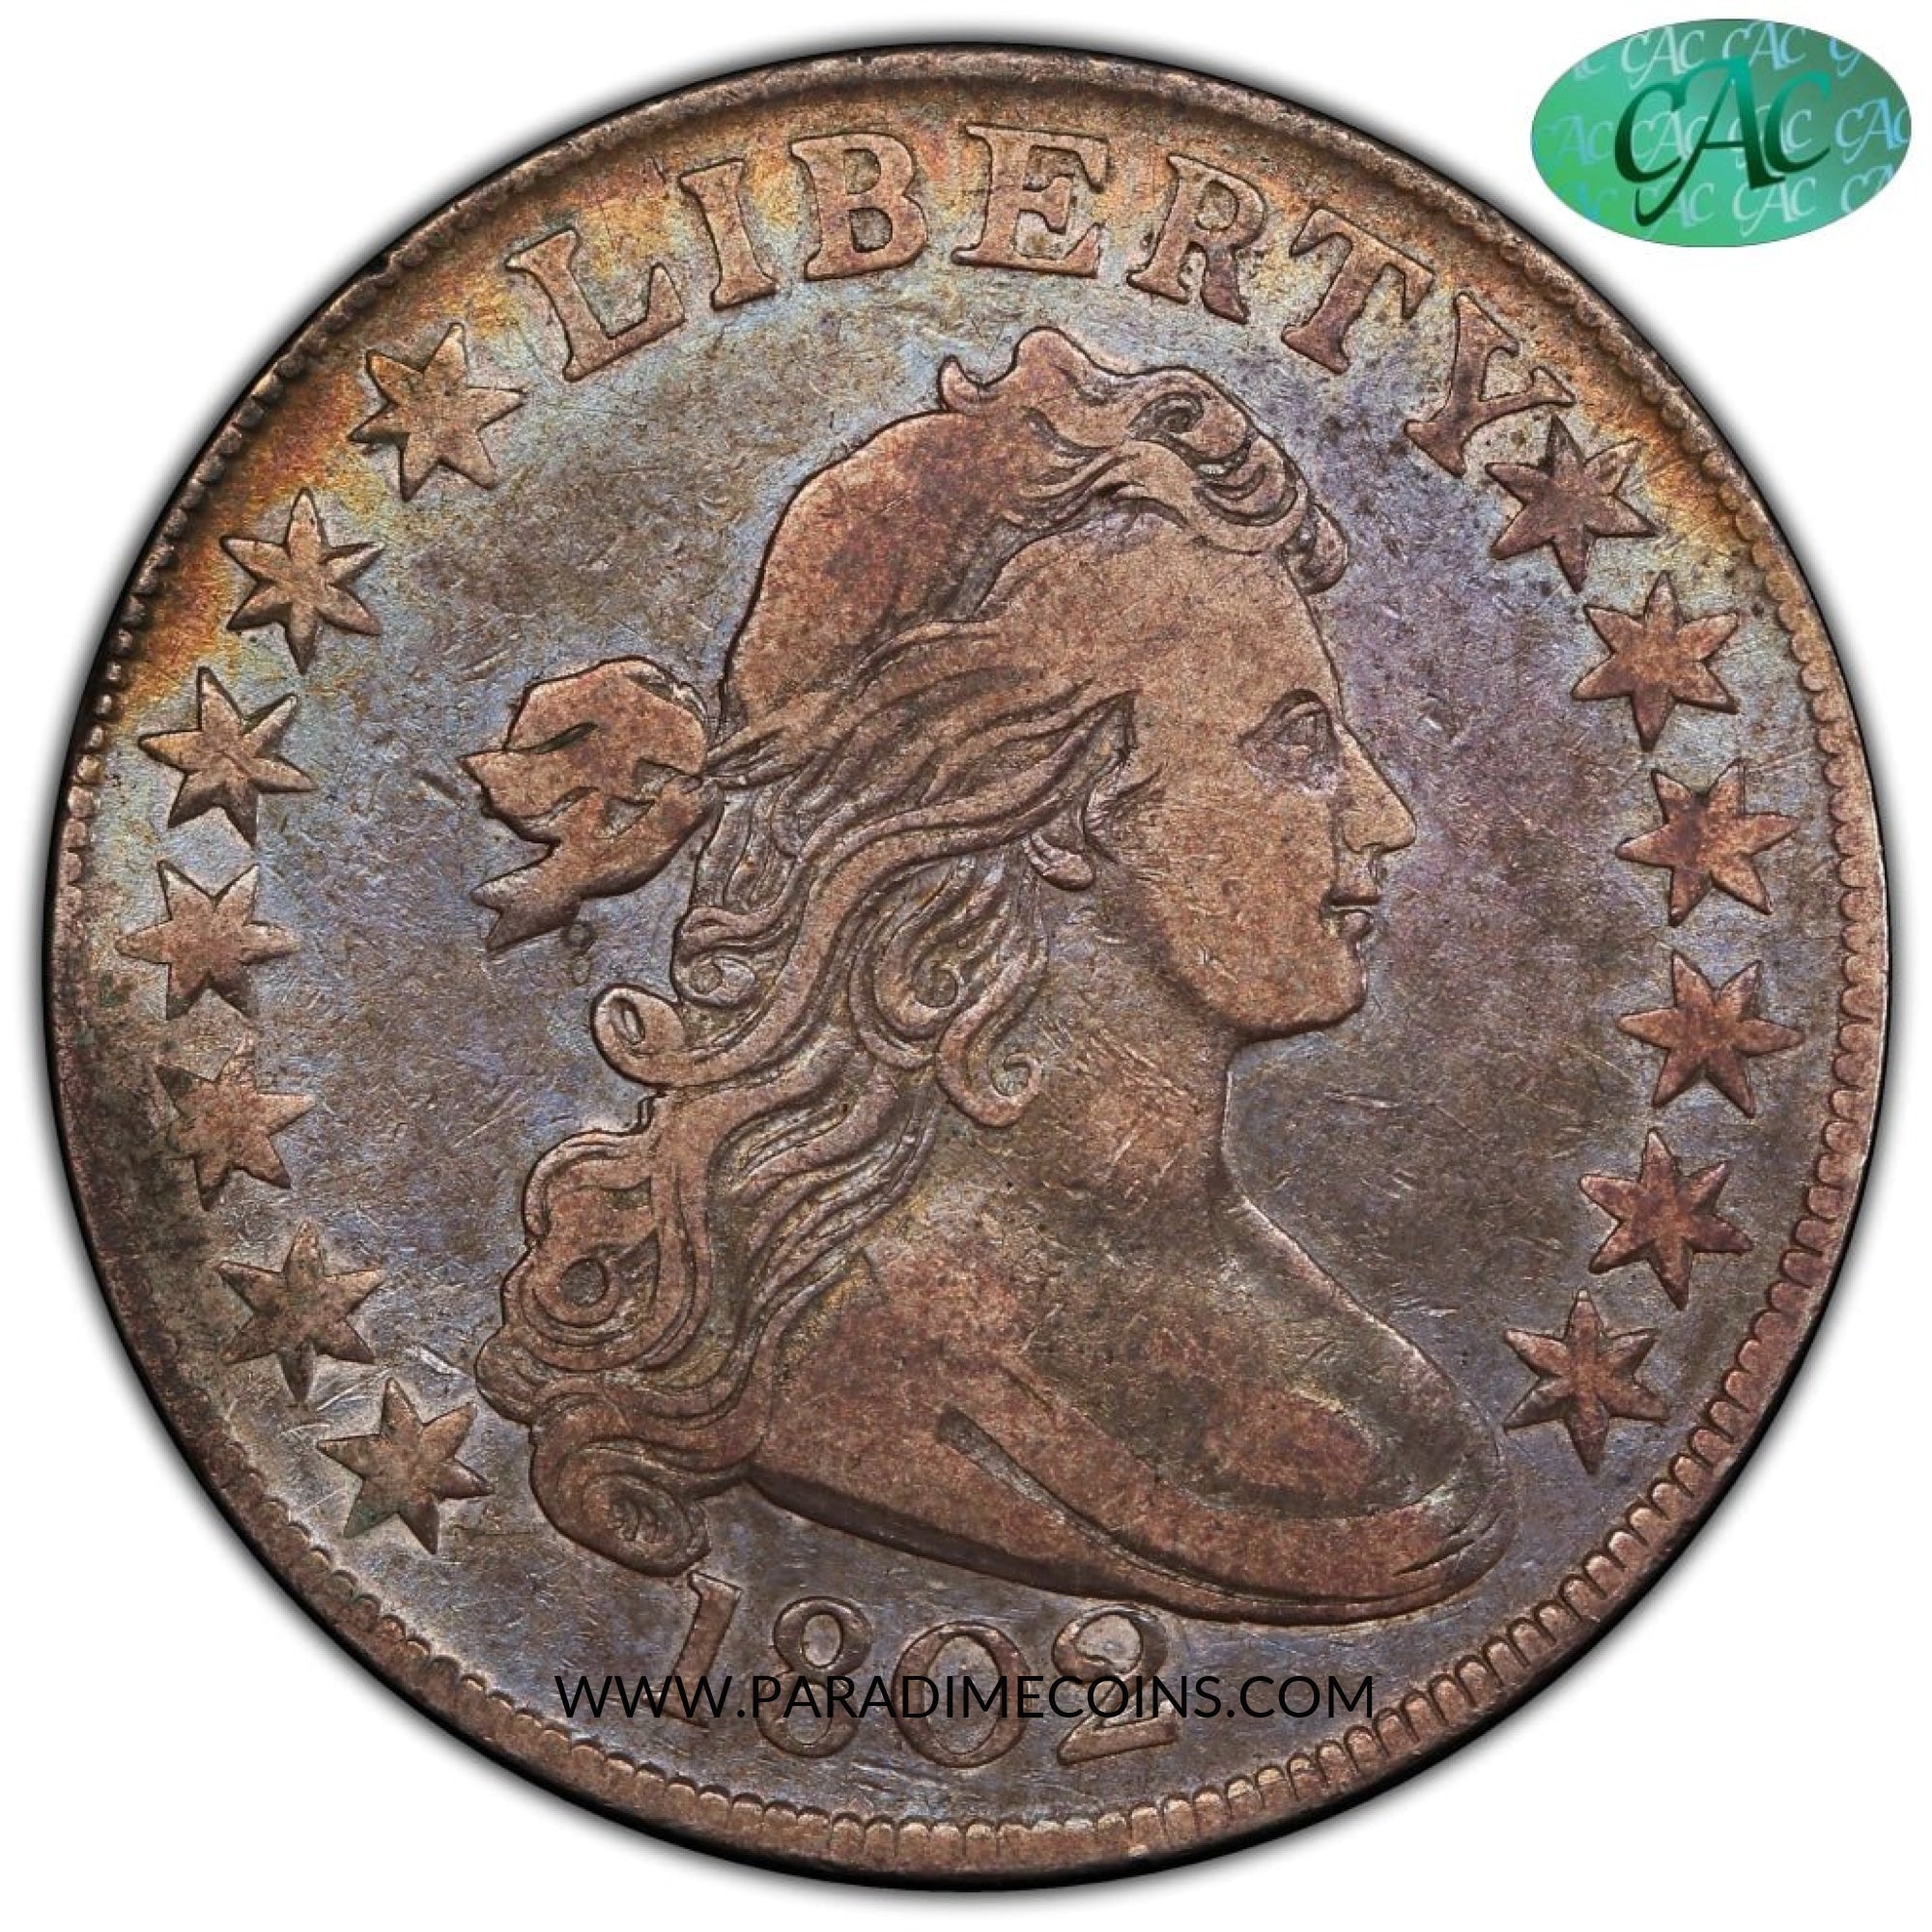 1802 50C VF35 PCGS CAC - Paradime Coins | PCGS NGC CACG CAC Rare US Numismatic Coins For Sale